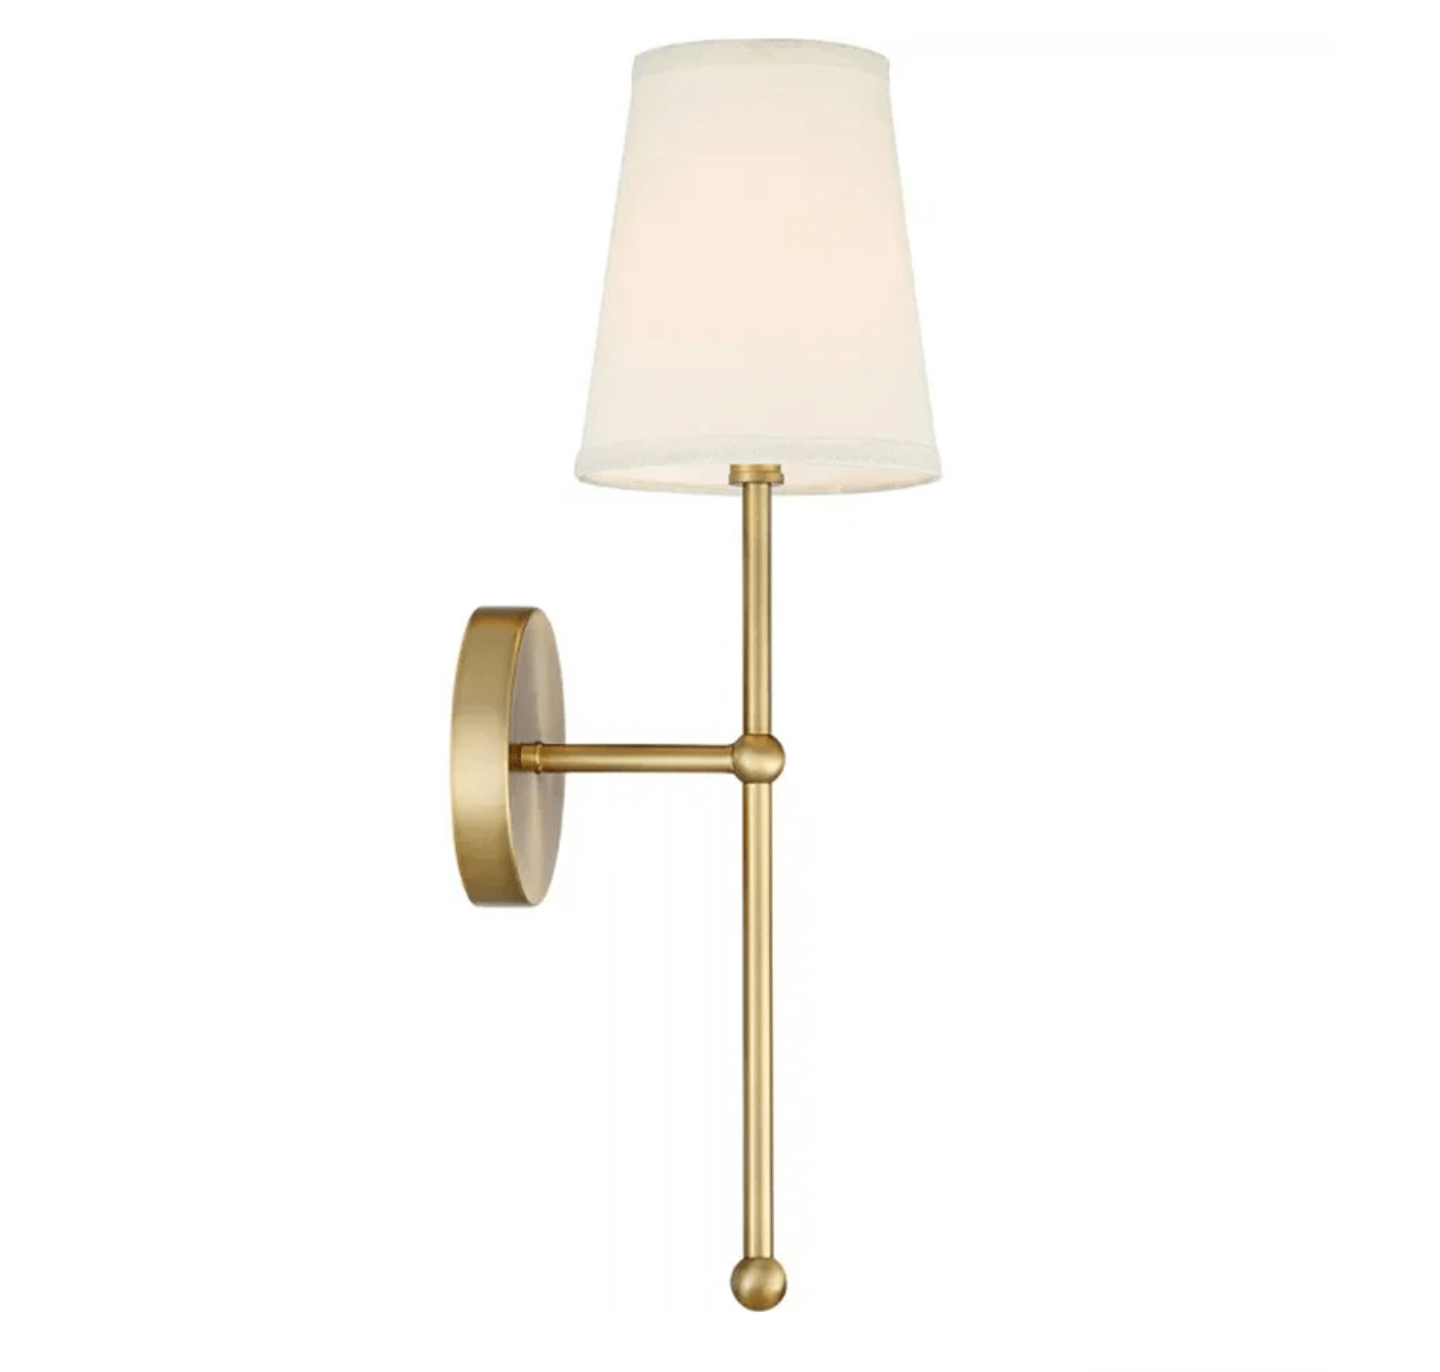 Elegance Gold Wall Lamp